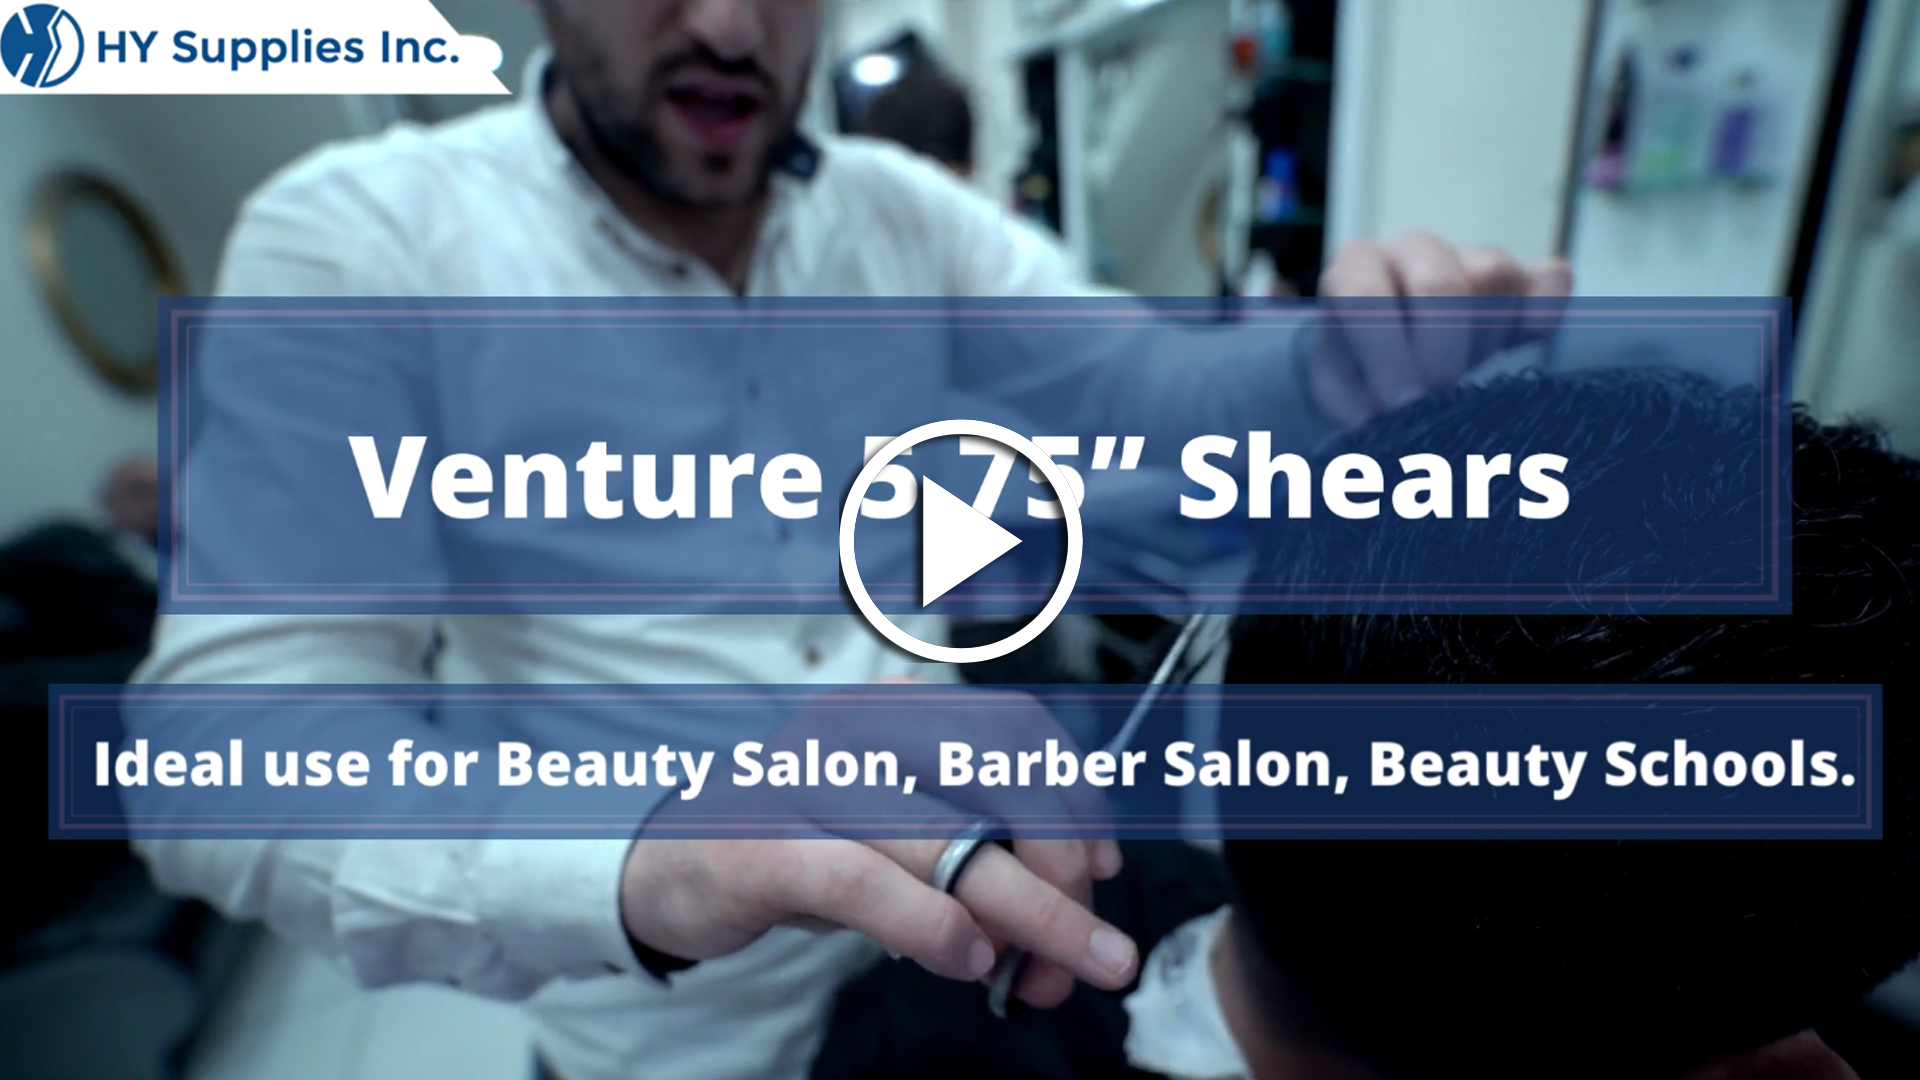 Venture 5.75” Shears